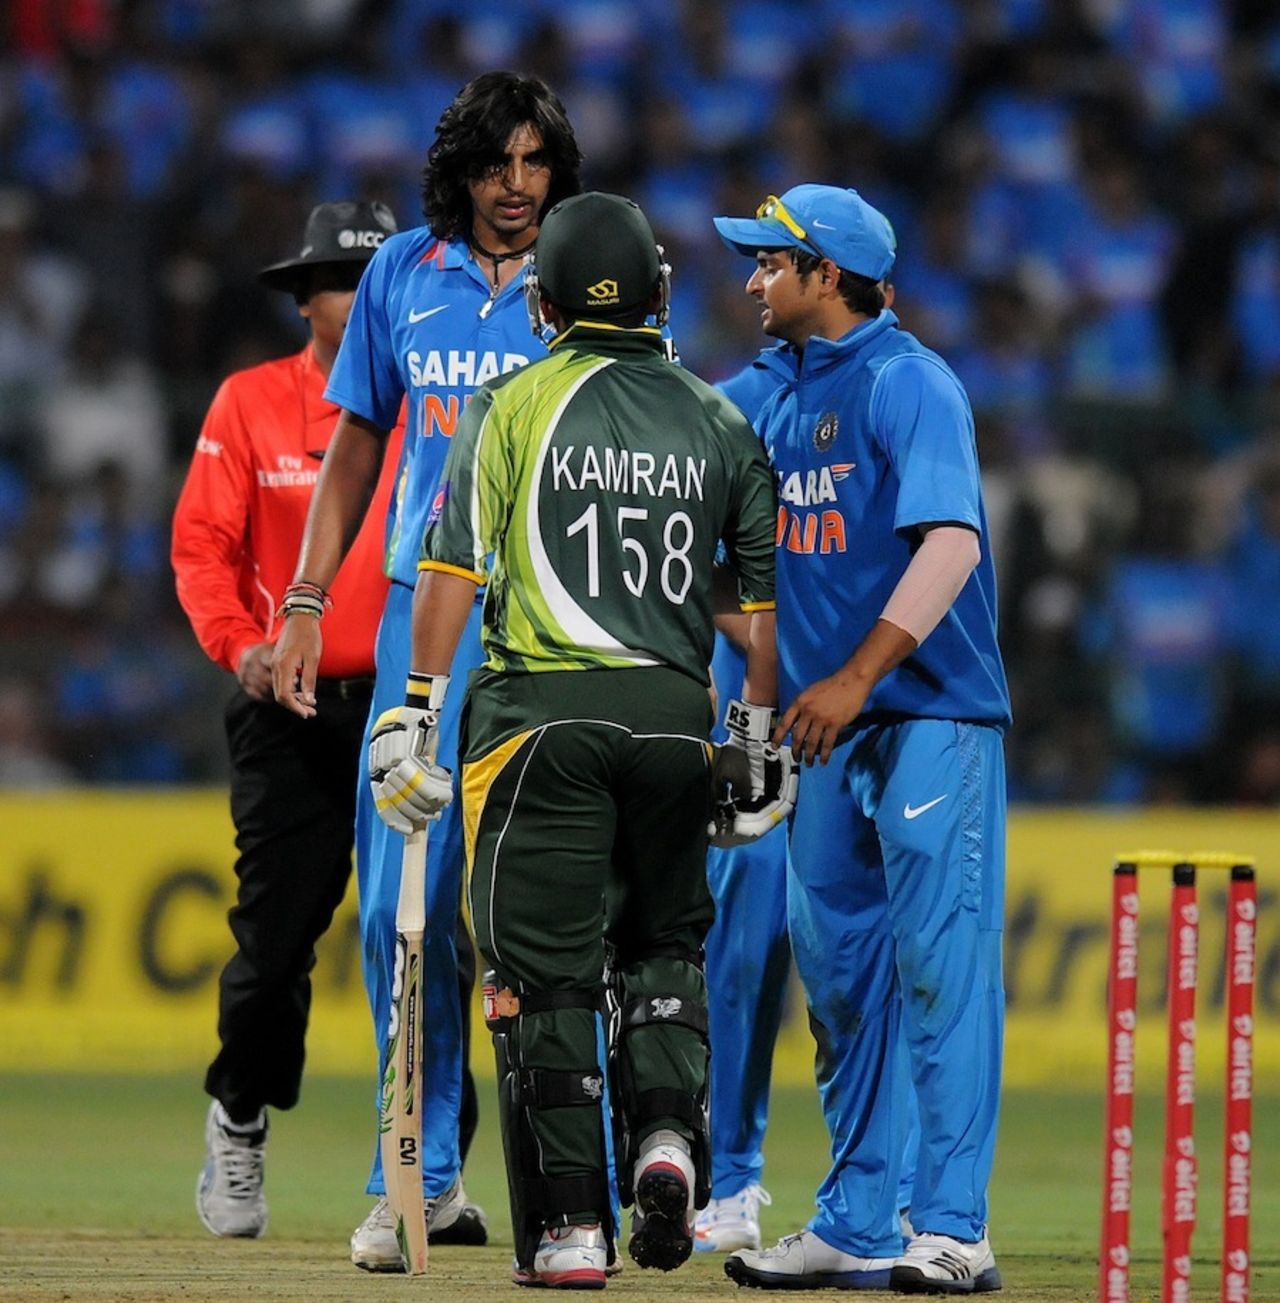 Ishant Sharma gets into an argument with Kamran Akmal, India v Pakistan, 1st T20, Bangalore, December 25, 2012